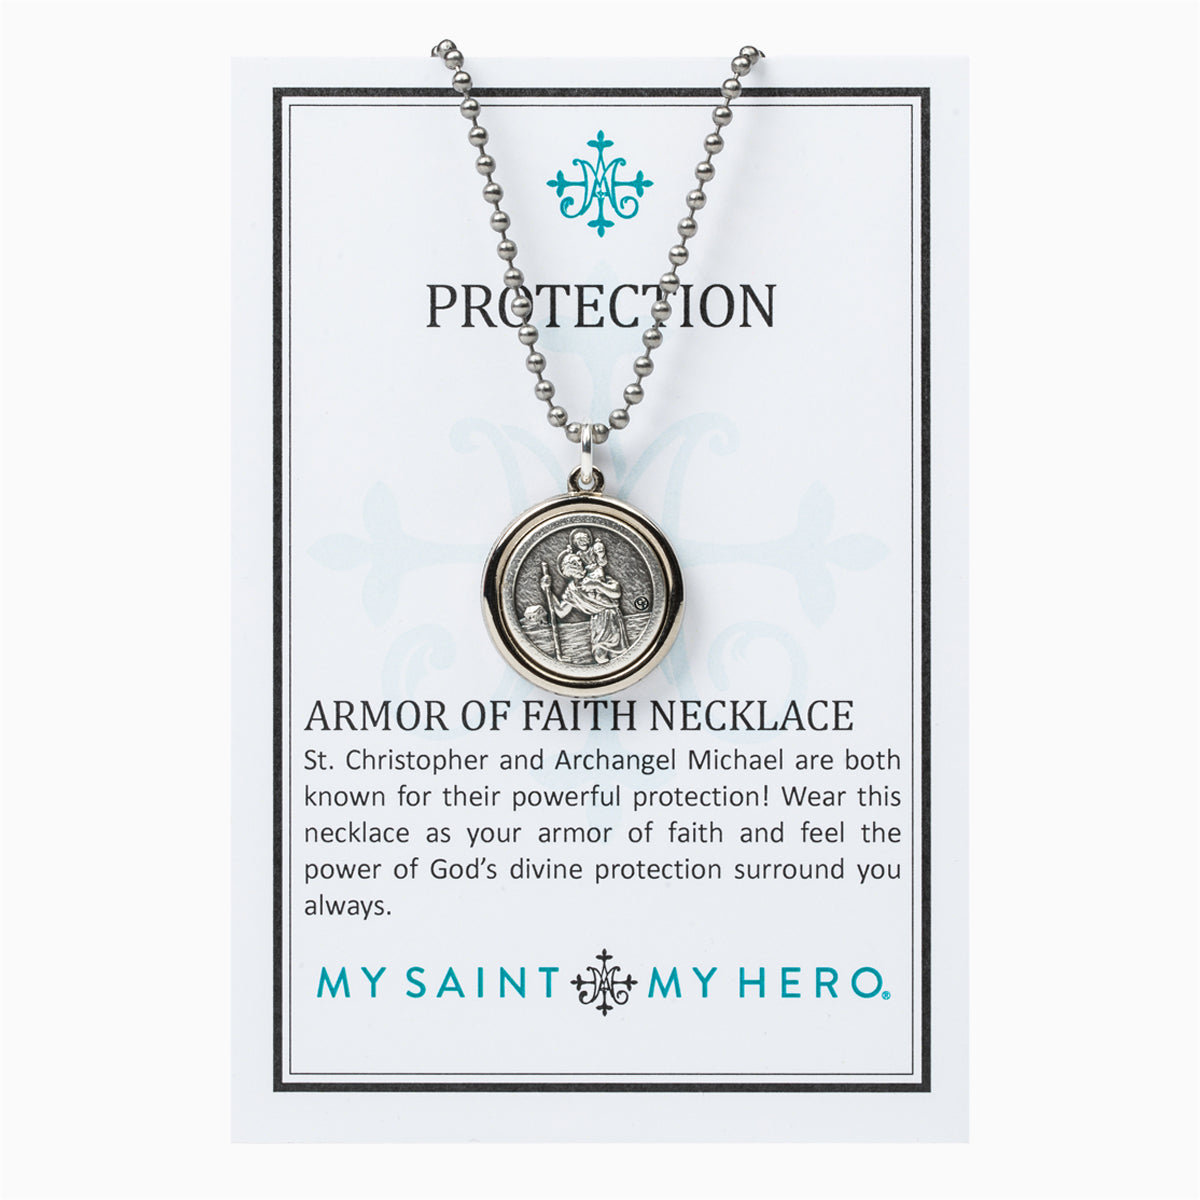 Archangel Michael & Saint Christopher Protection Armor of Faith Necklace - Bead Ball Chain